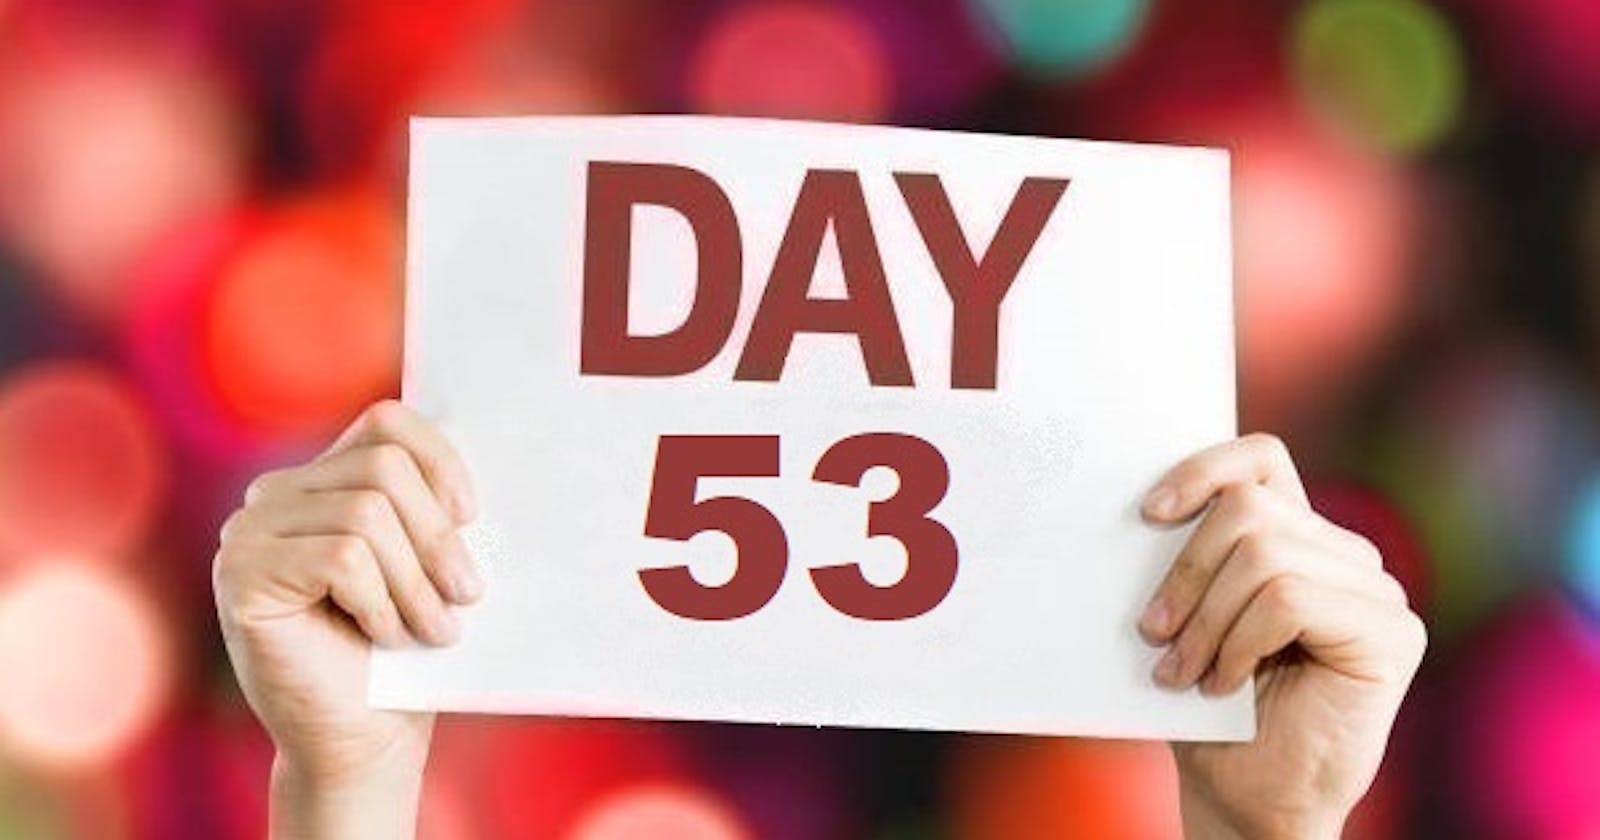 Day53 ----> 90DaysOfDevOps Challenge @TWS